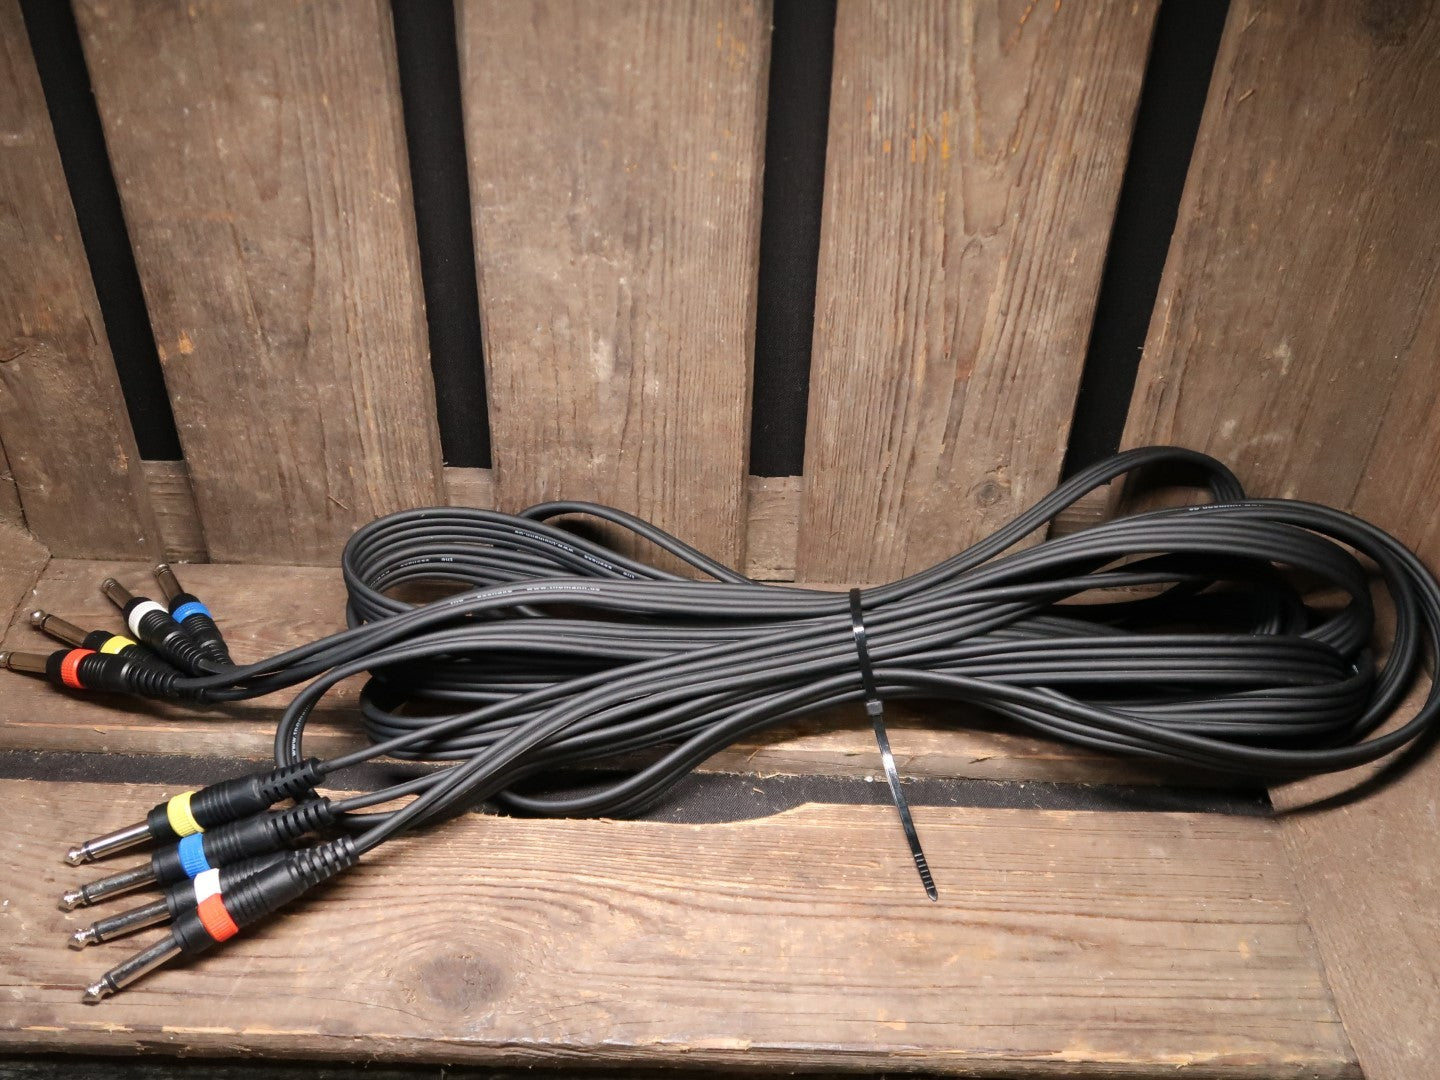 The sssnake - 4 mono jack kabels in een